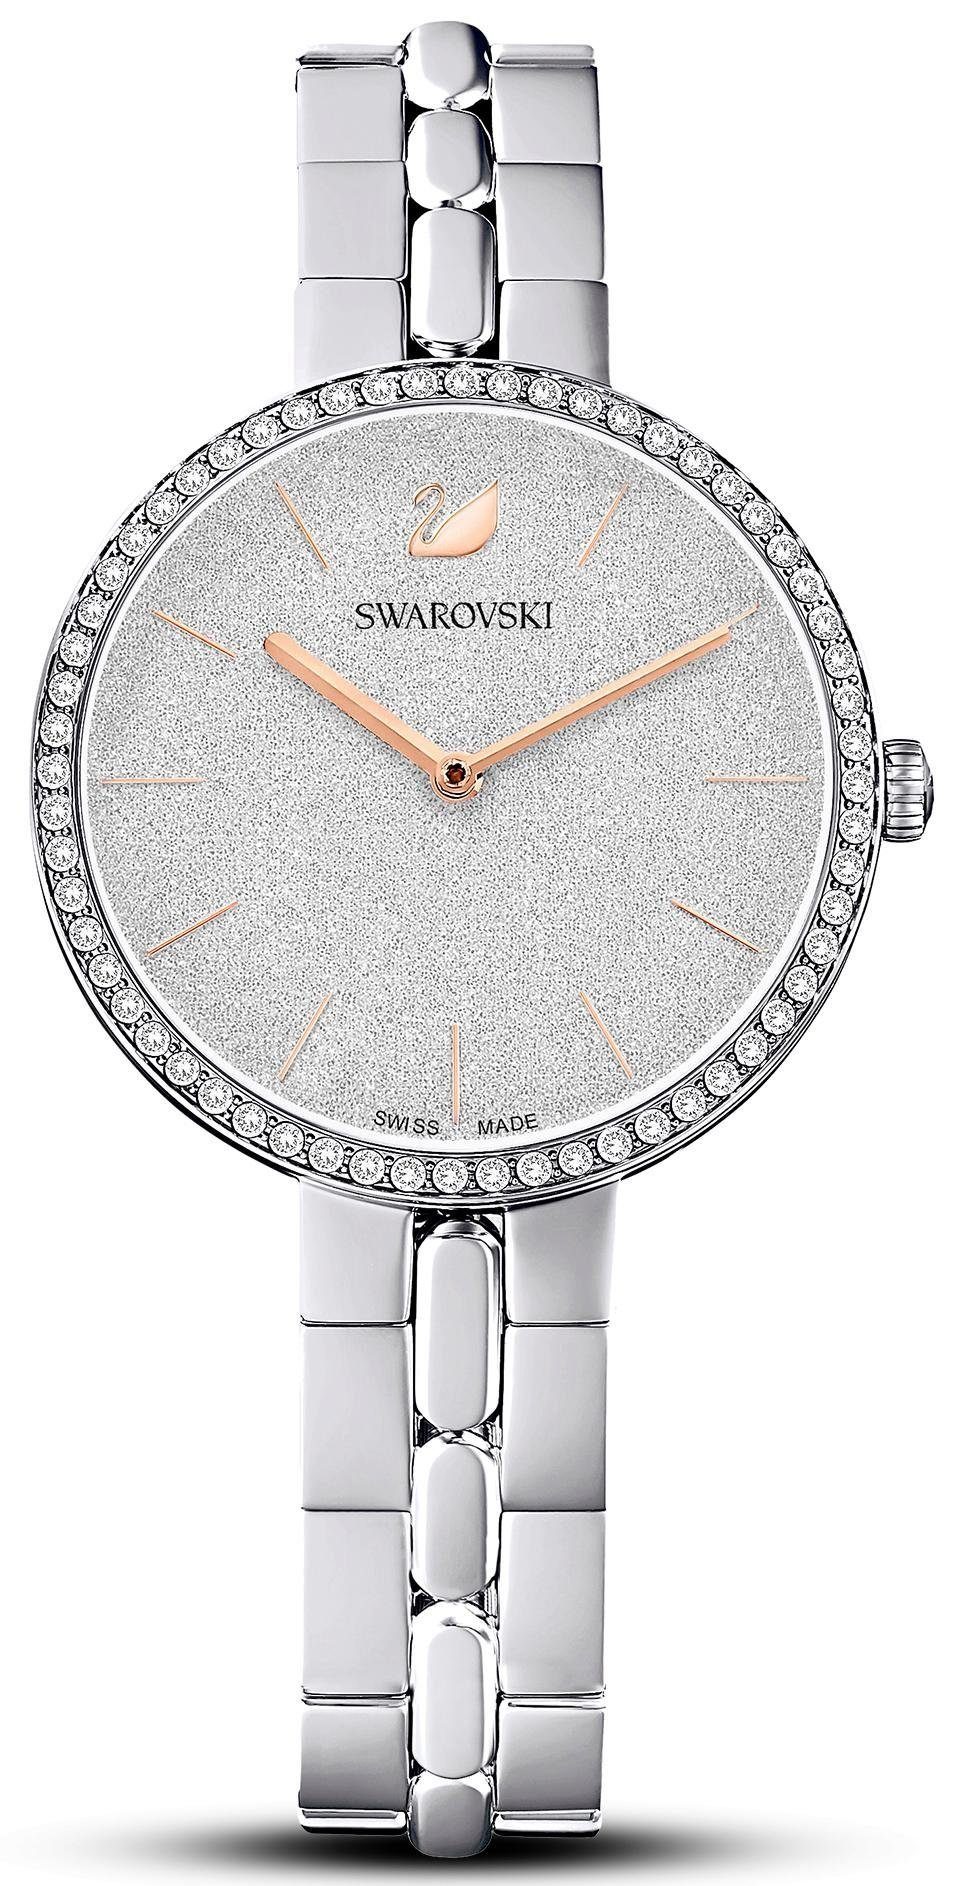 Swarovski Quarzuhr COSMOPOLITAN, 5517807, Armbanduhr, Damenuhr, Swarovski-Kristalle, Swiss Made